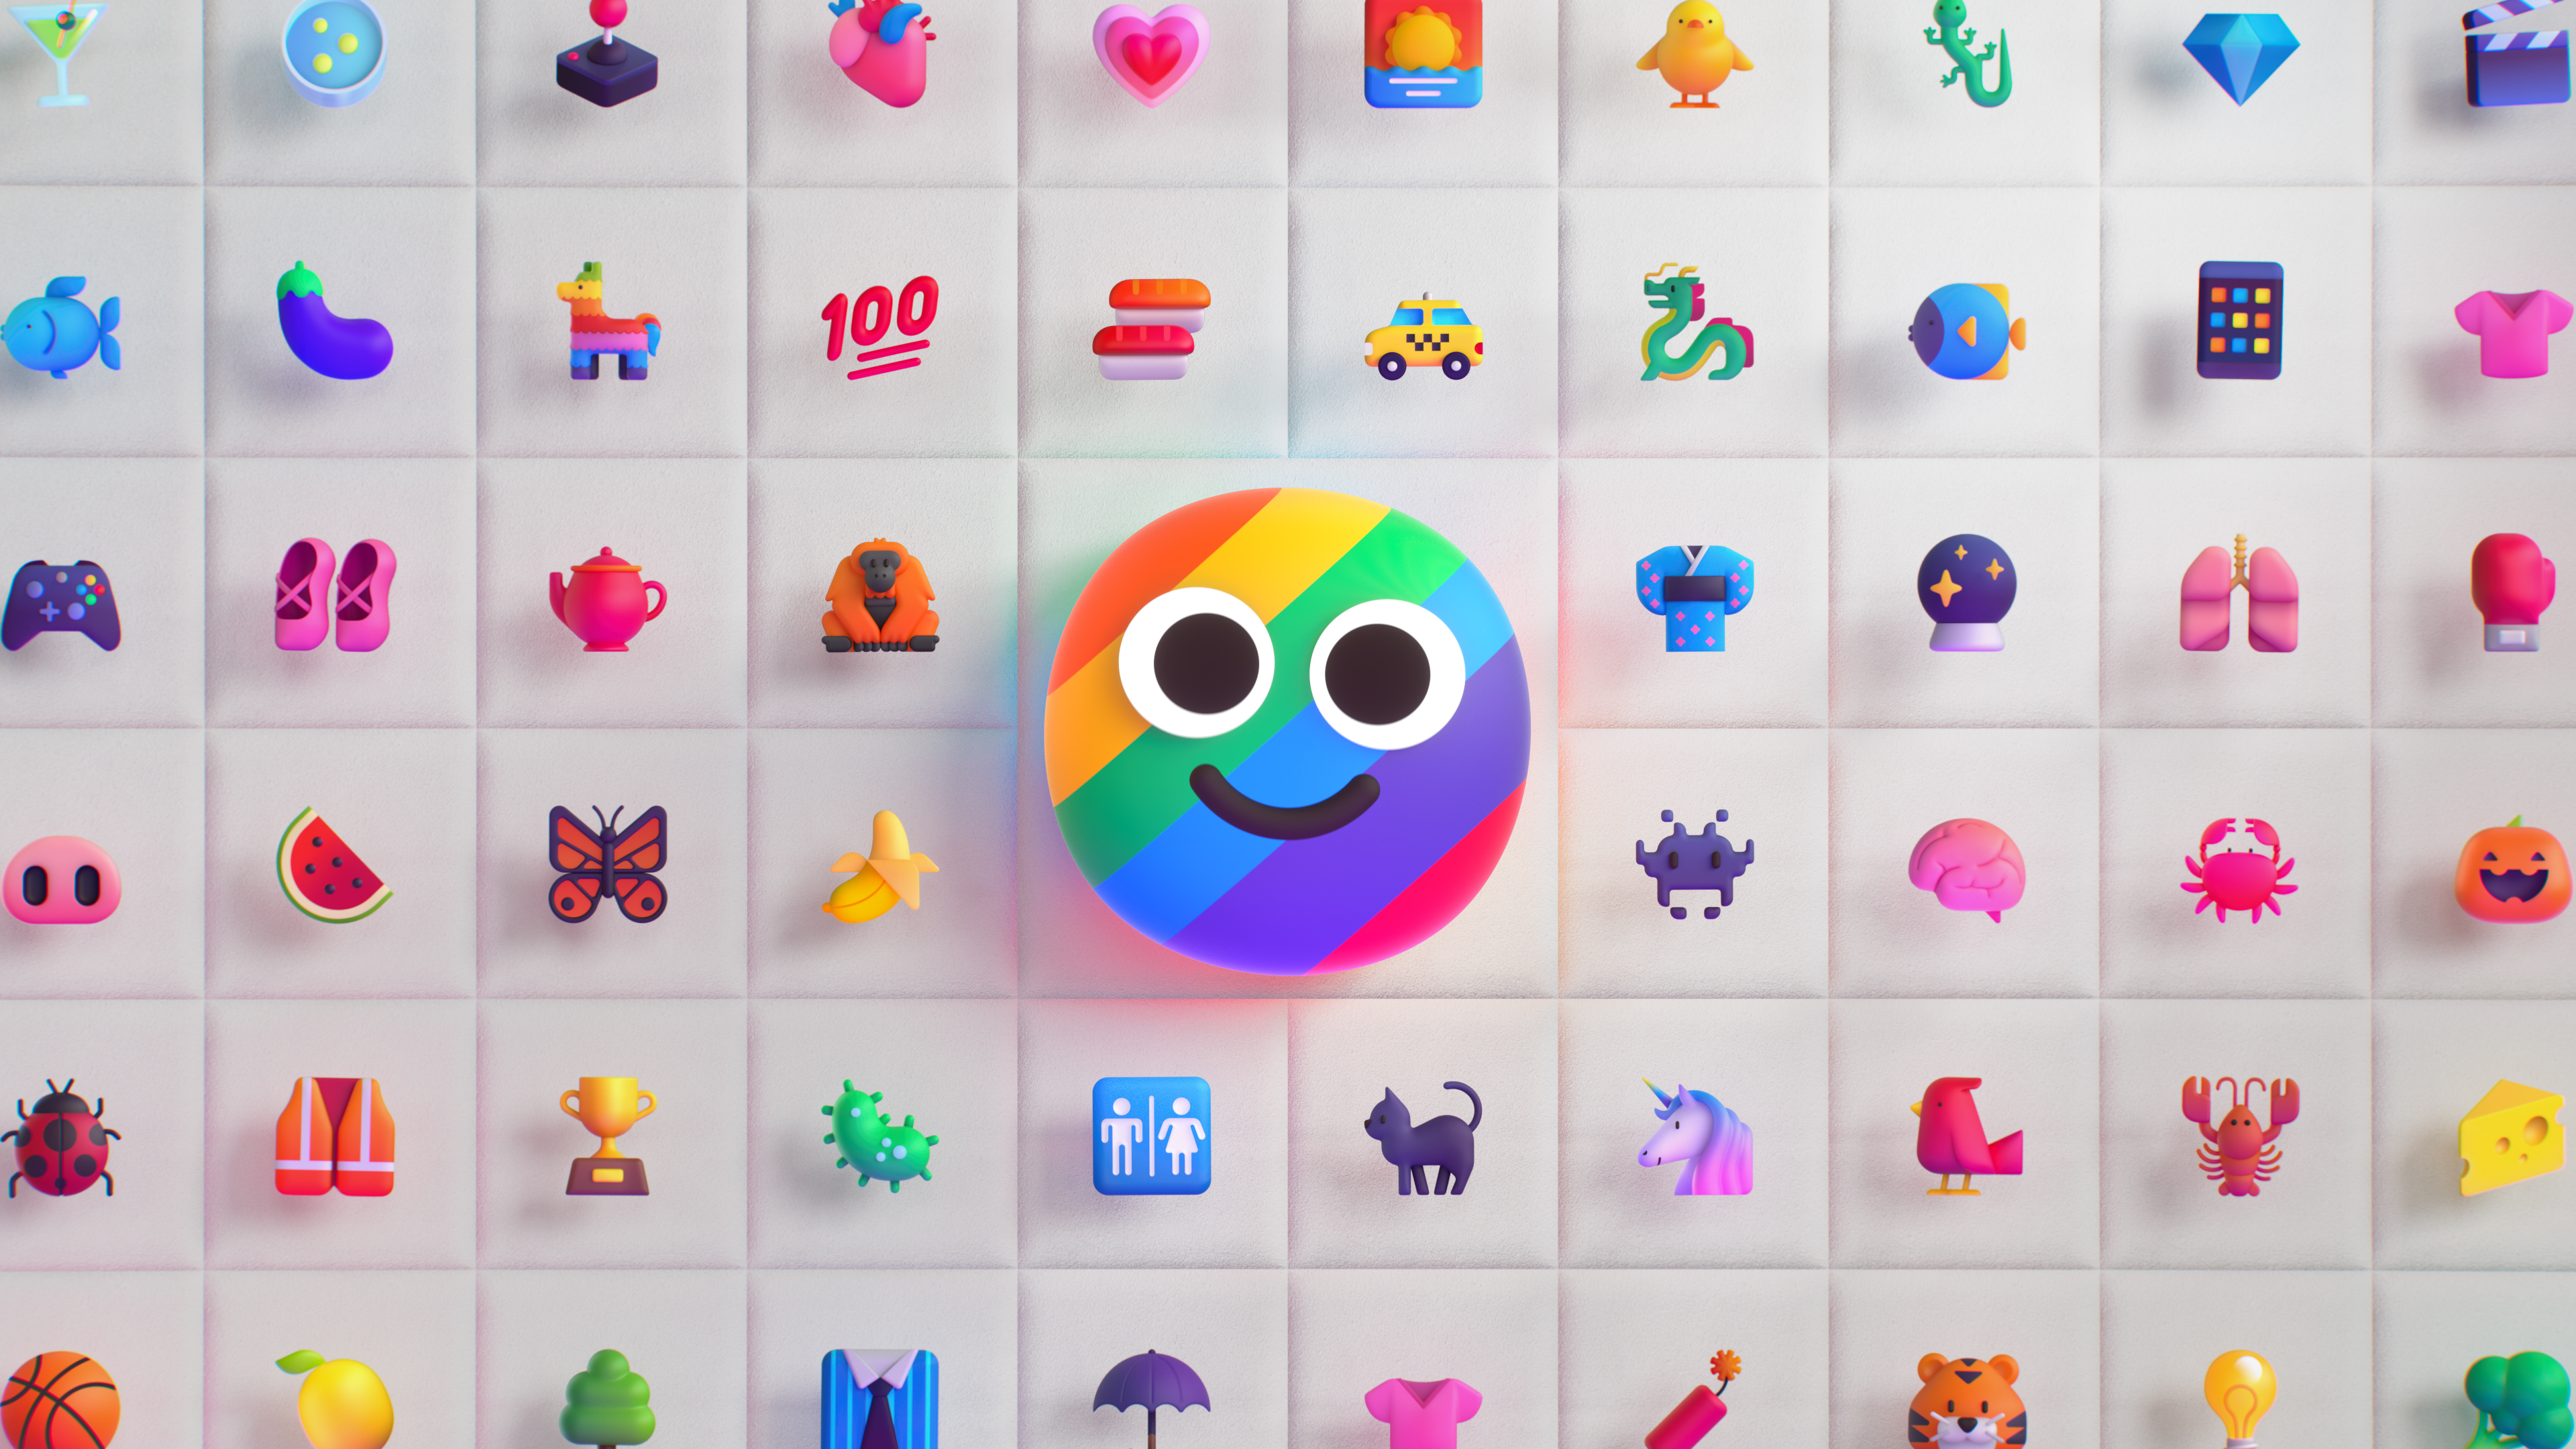 Download wallpaper 3840x2160 colorful emoji, abstract 4k wallpaper, uhd  wallpaper, 16:9 widescreen 3840x2160 hd background, 27934